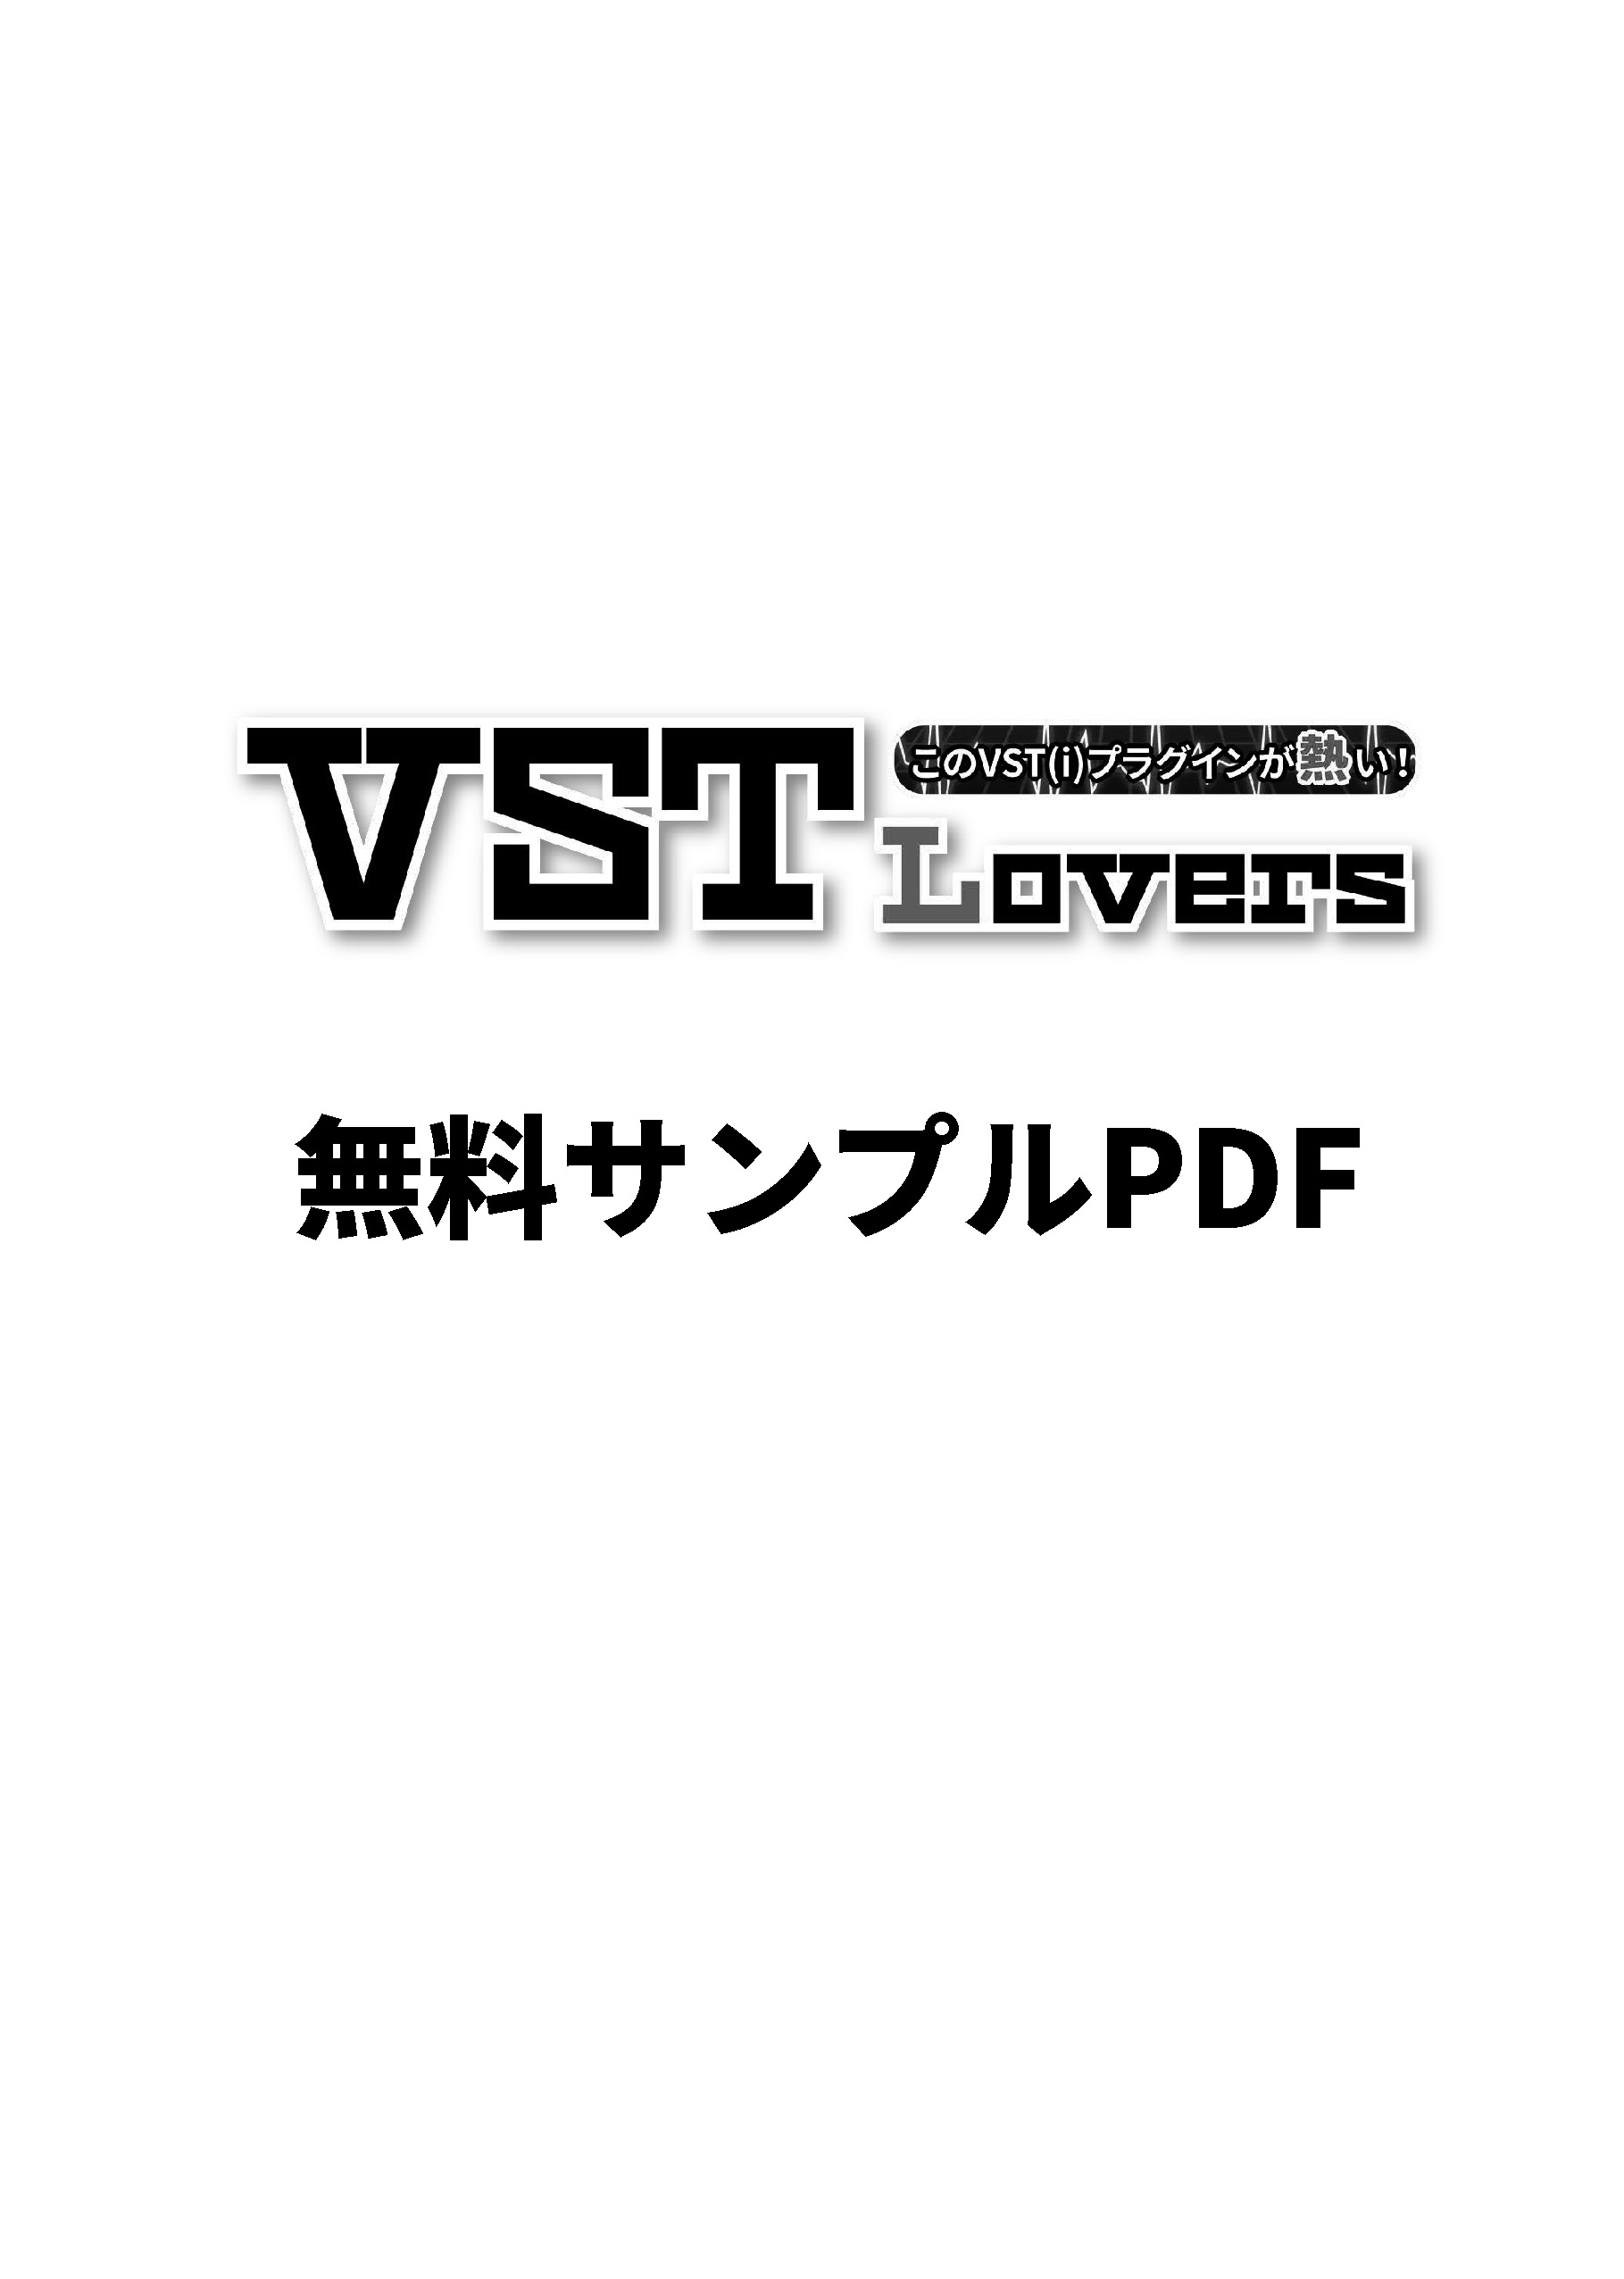 『VST Lovers』無料サンプルPDF